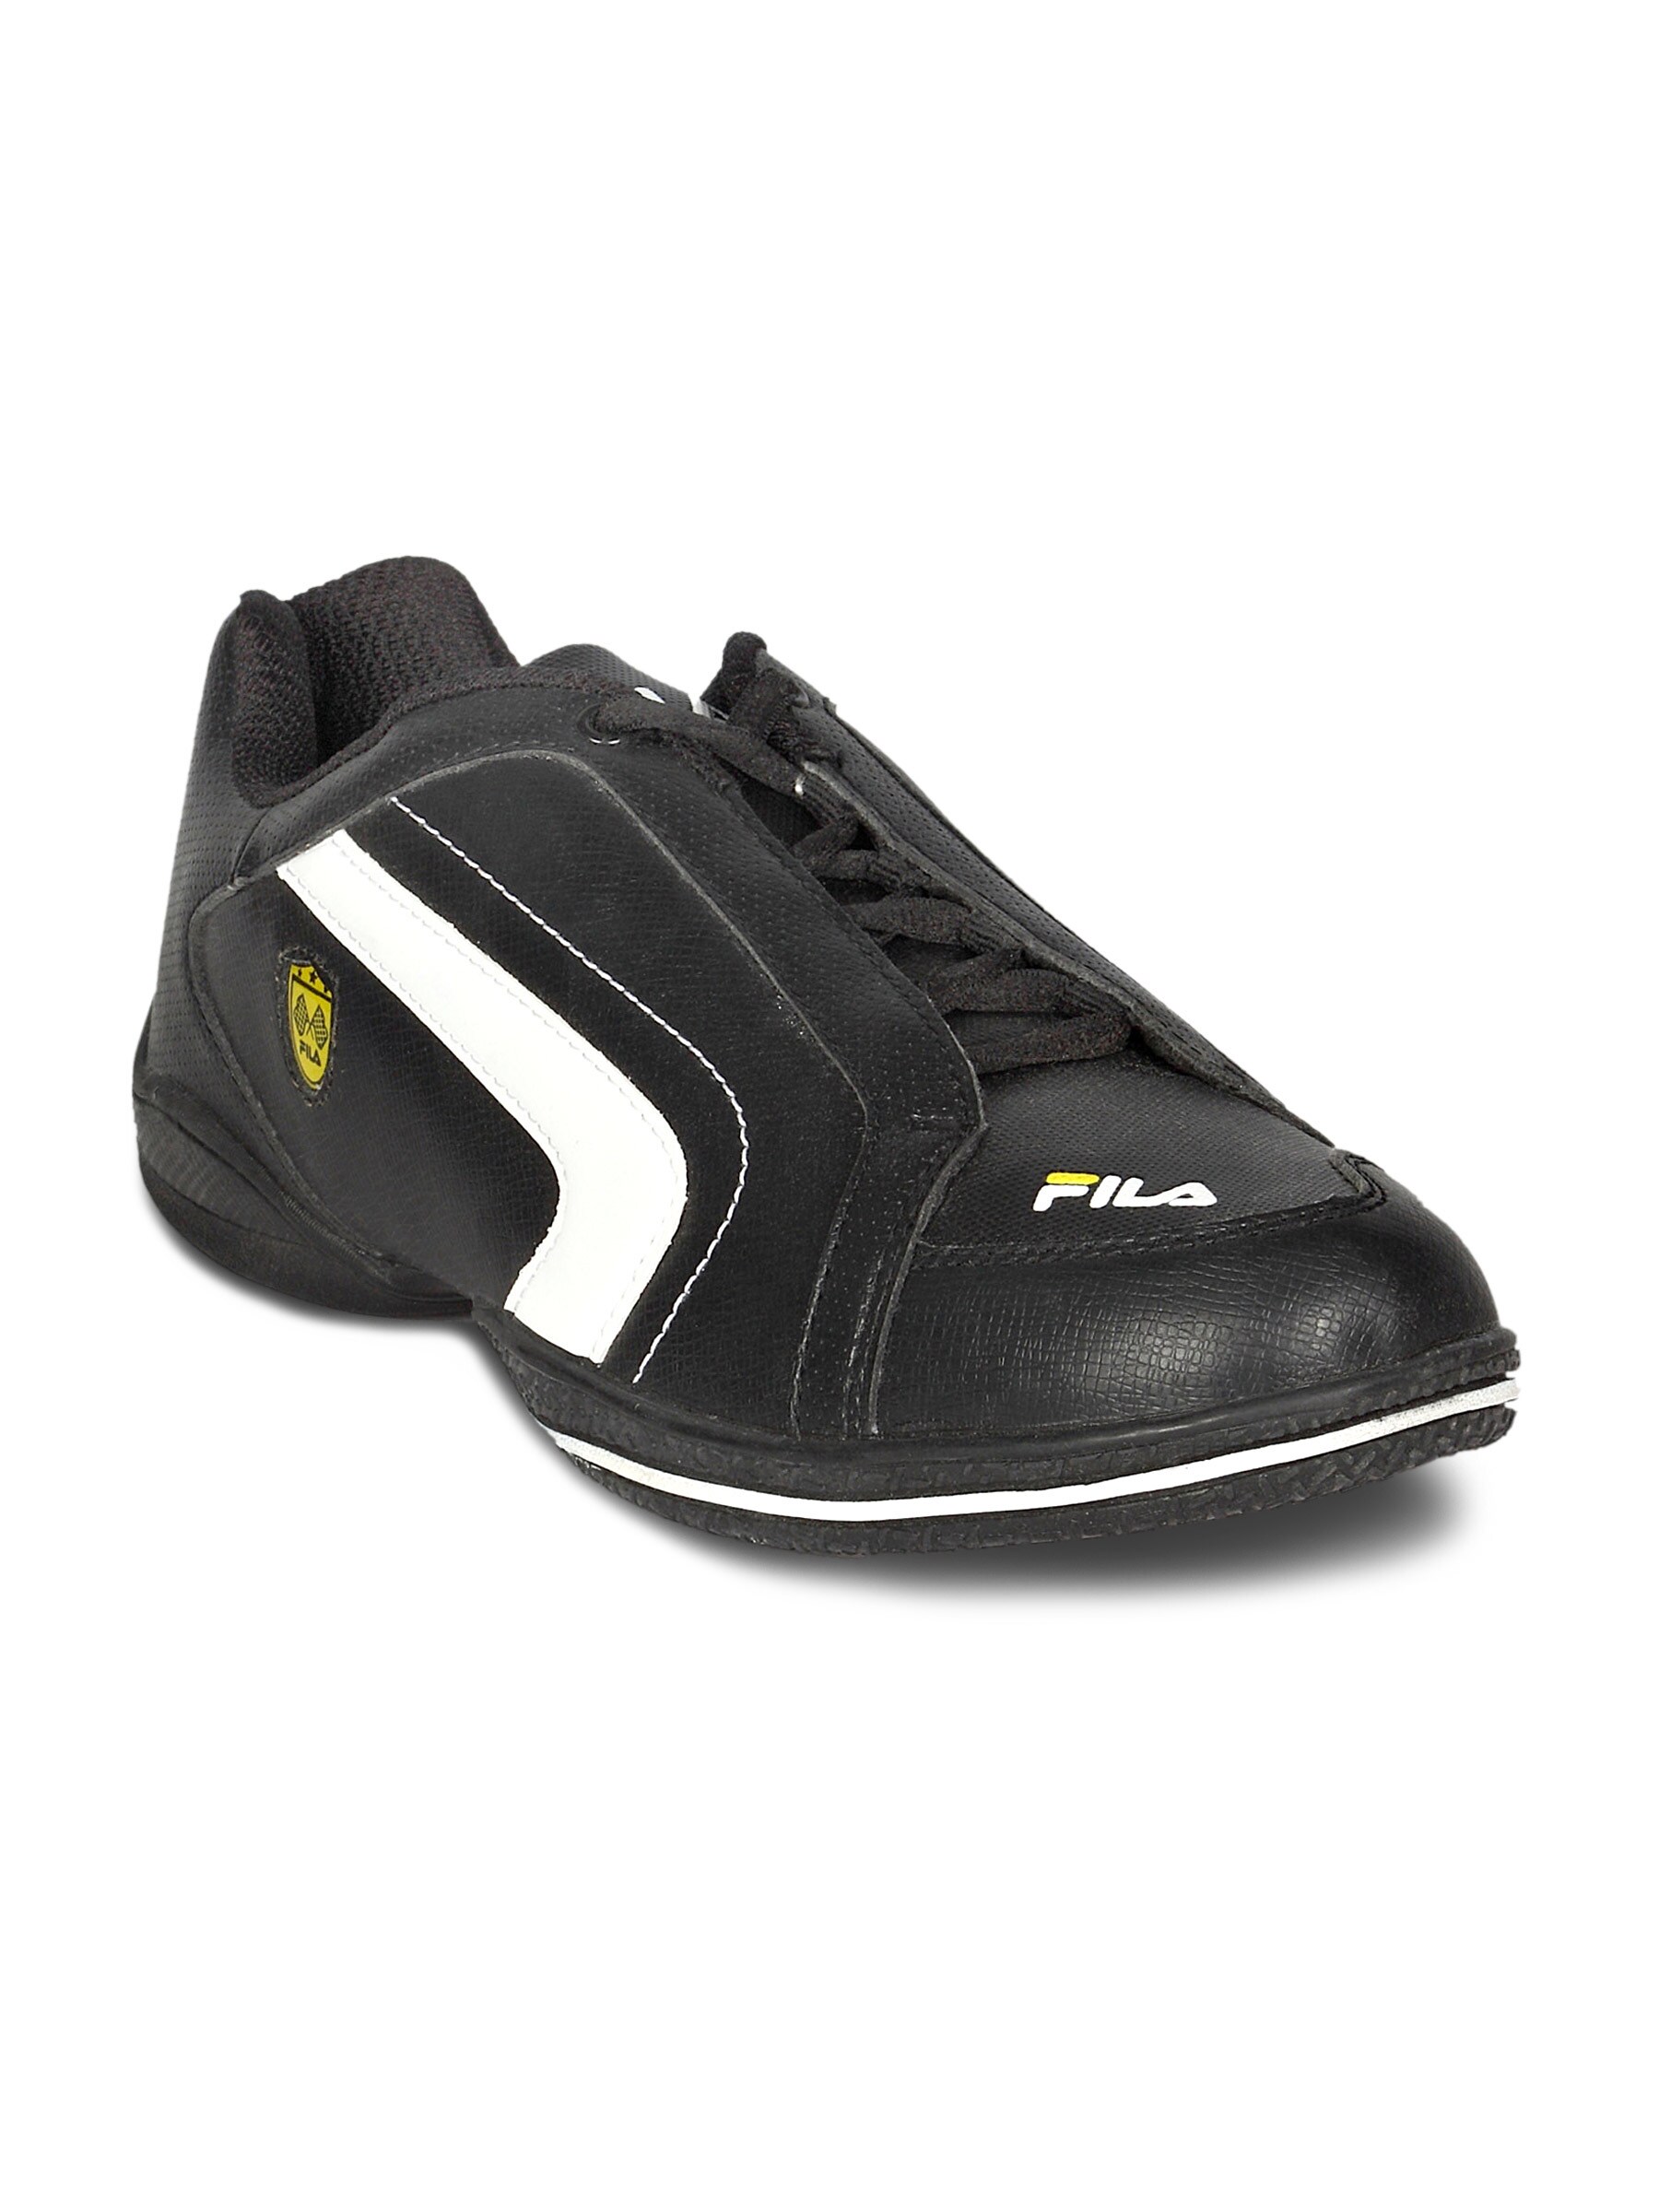 Fila Men's Phoenix Black White Shoe